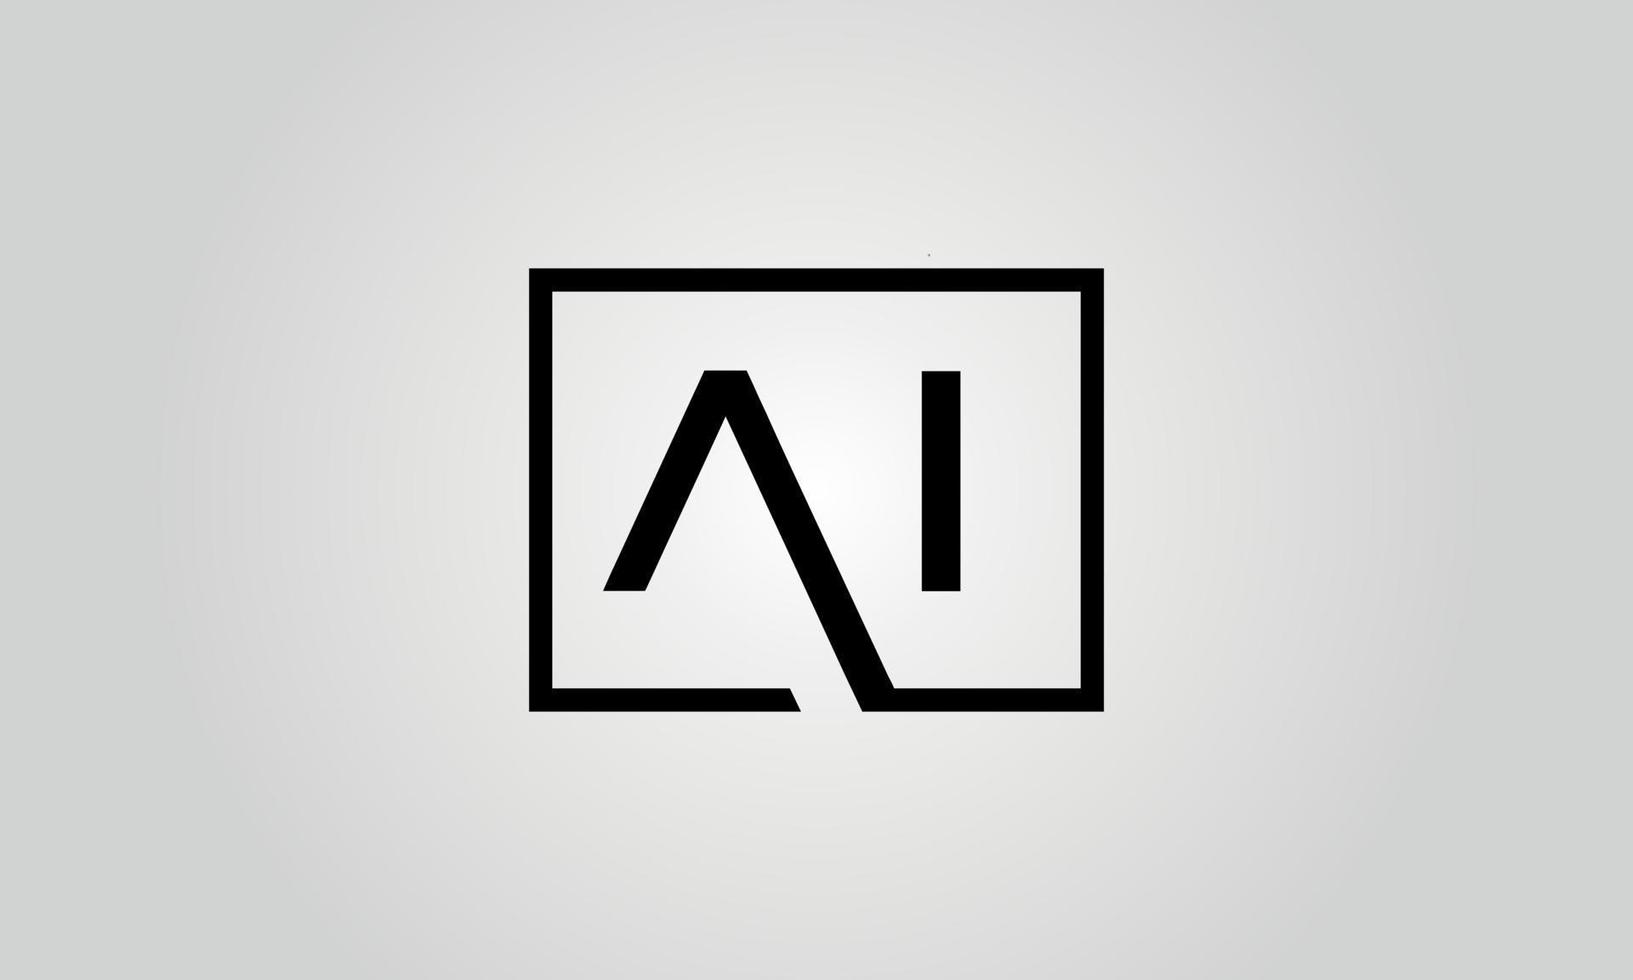 diseño de logotipo ai. plantilla de vector libre de diseño de icono de logotipo de letra ai inicial.